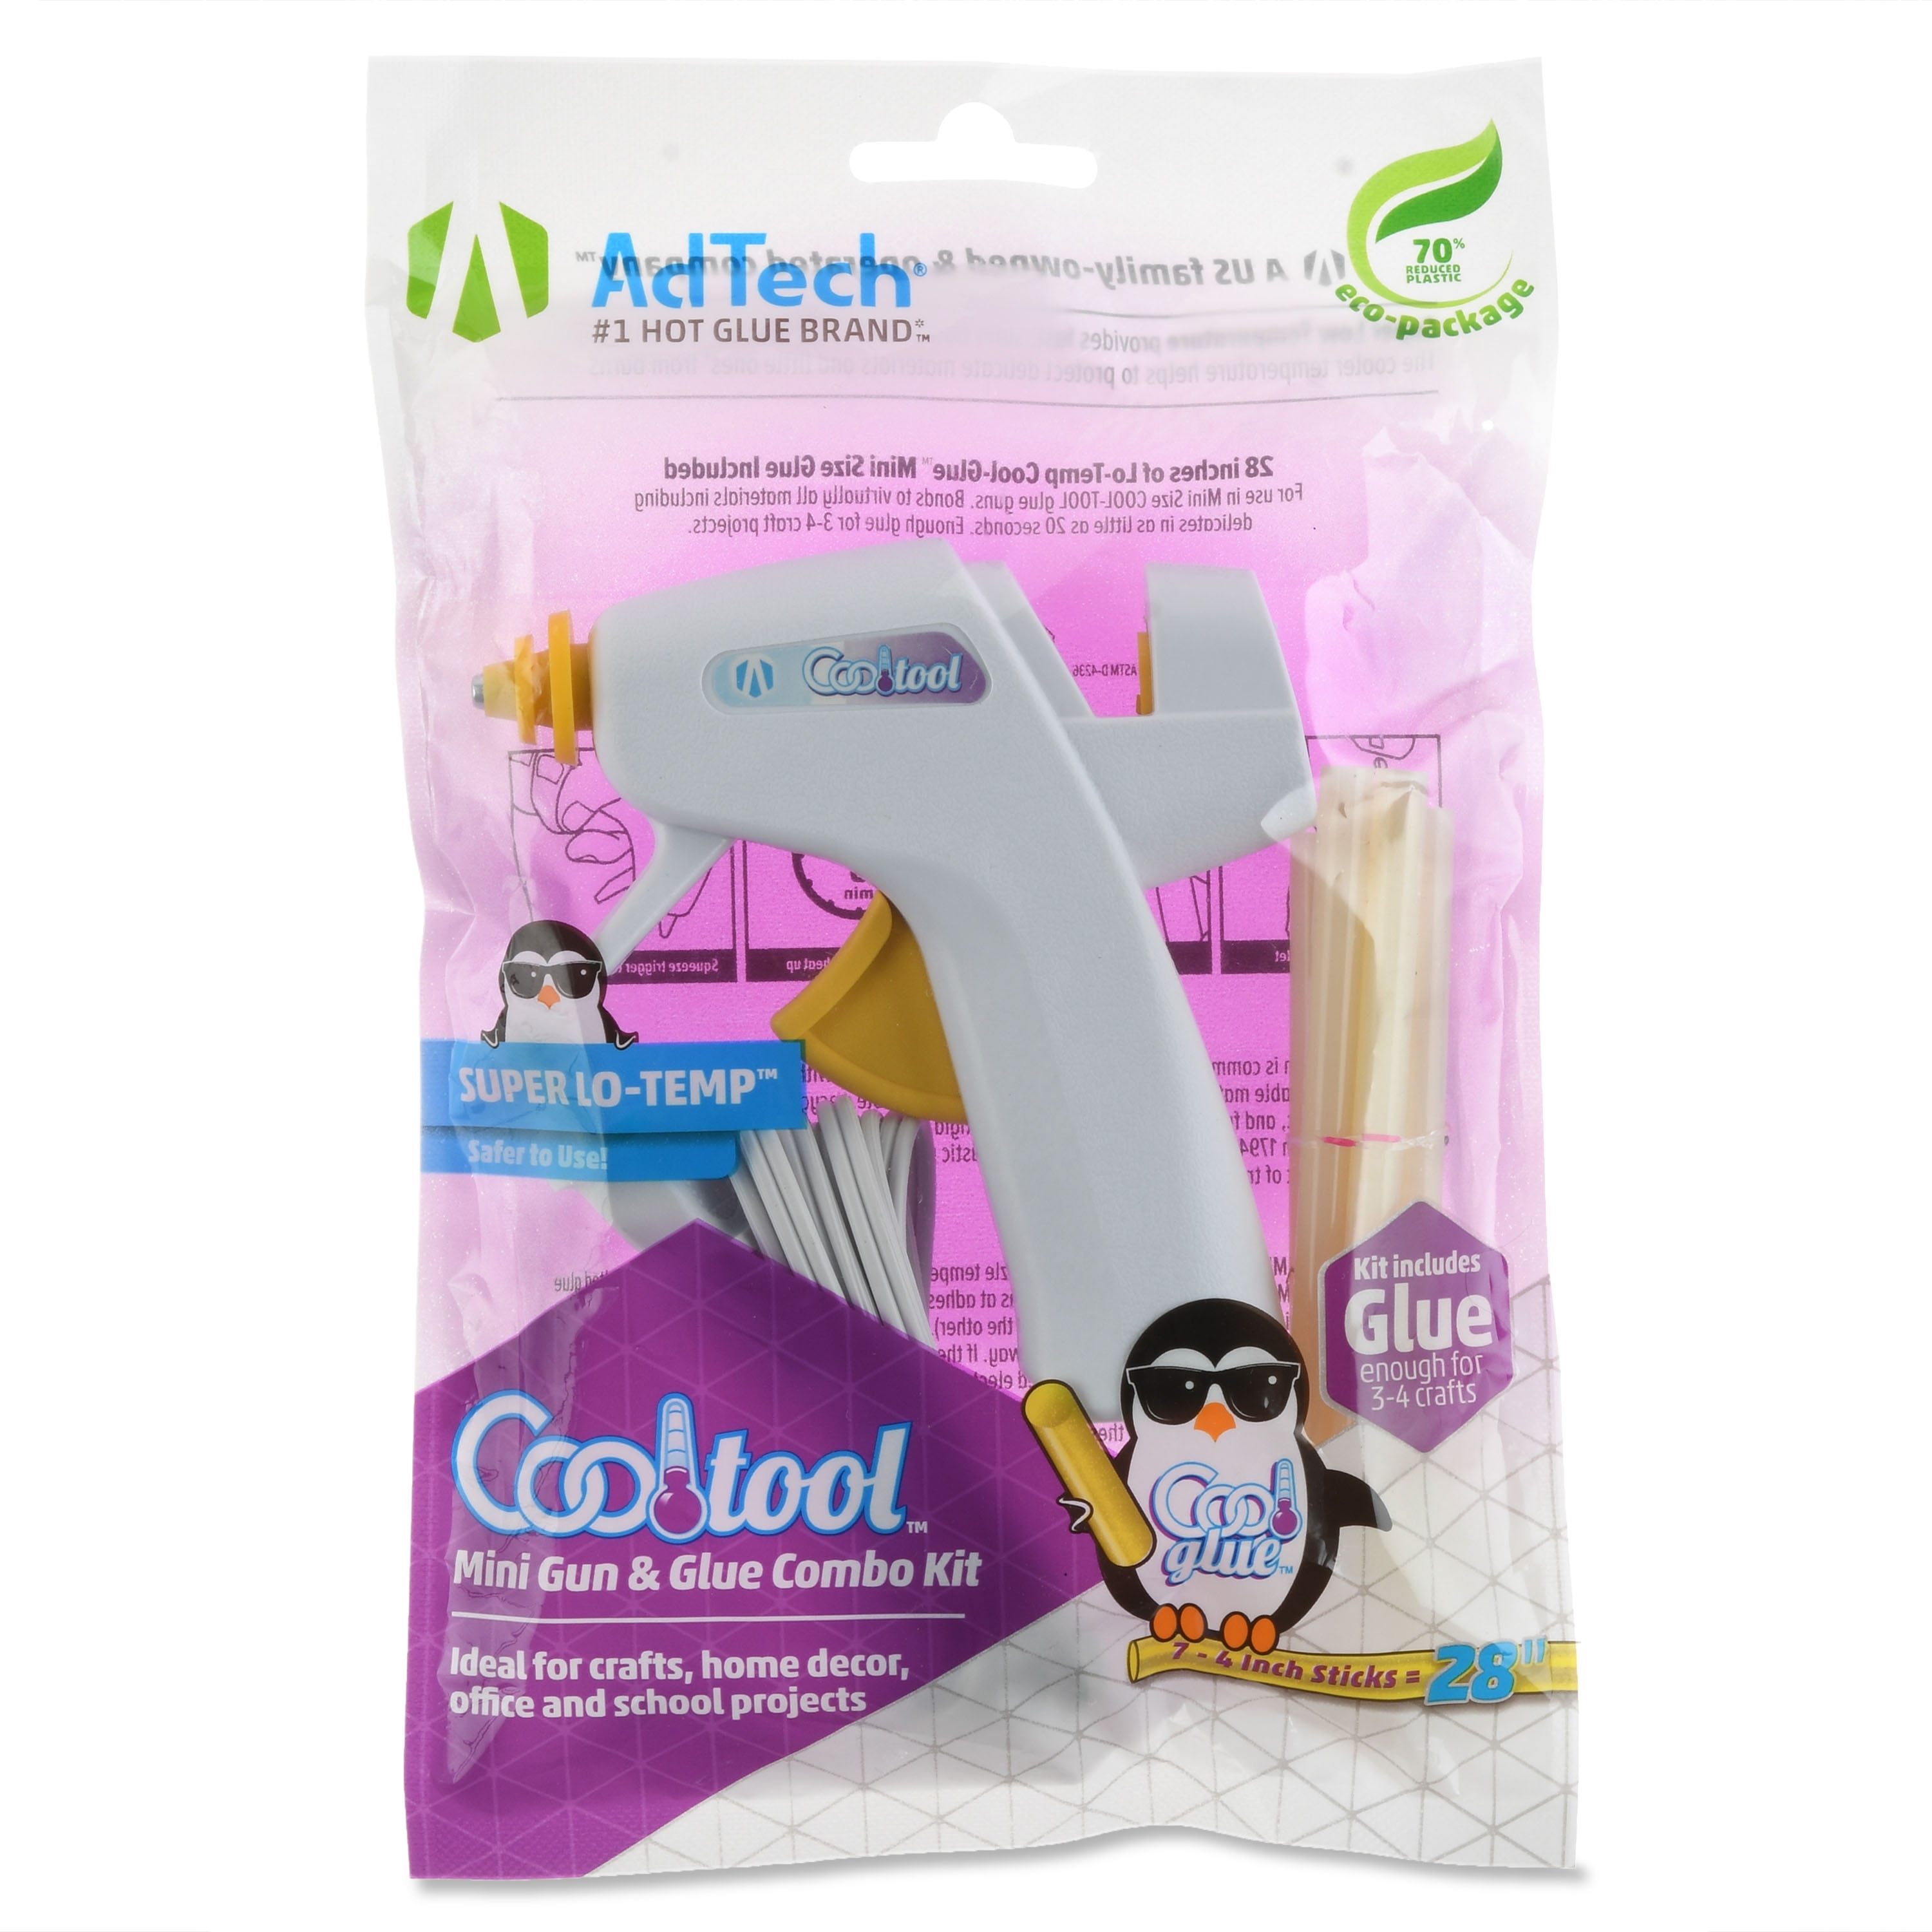 AdTech Ultra Low-Temp Cool Tool, Mini Hot Glue Gun for Safe Crafting, Children and Kids